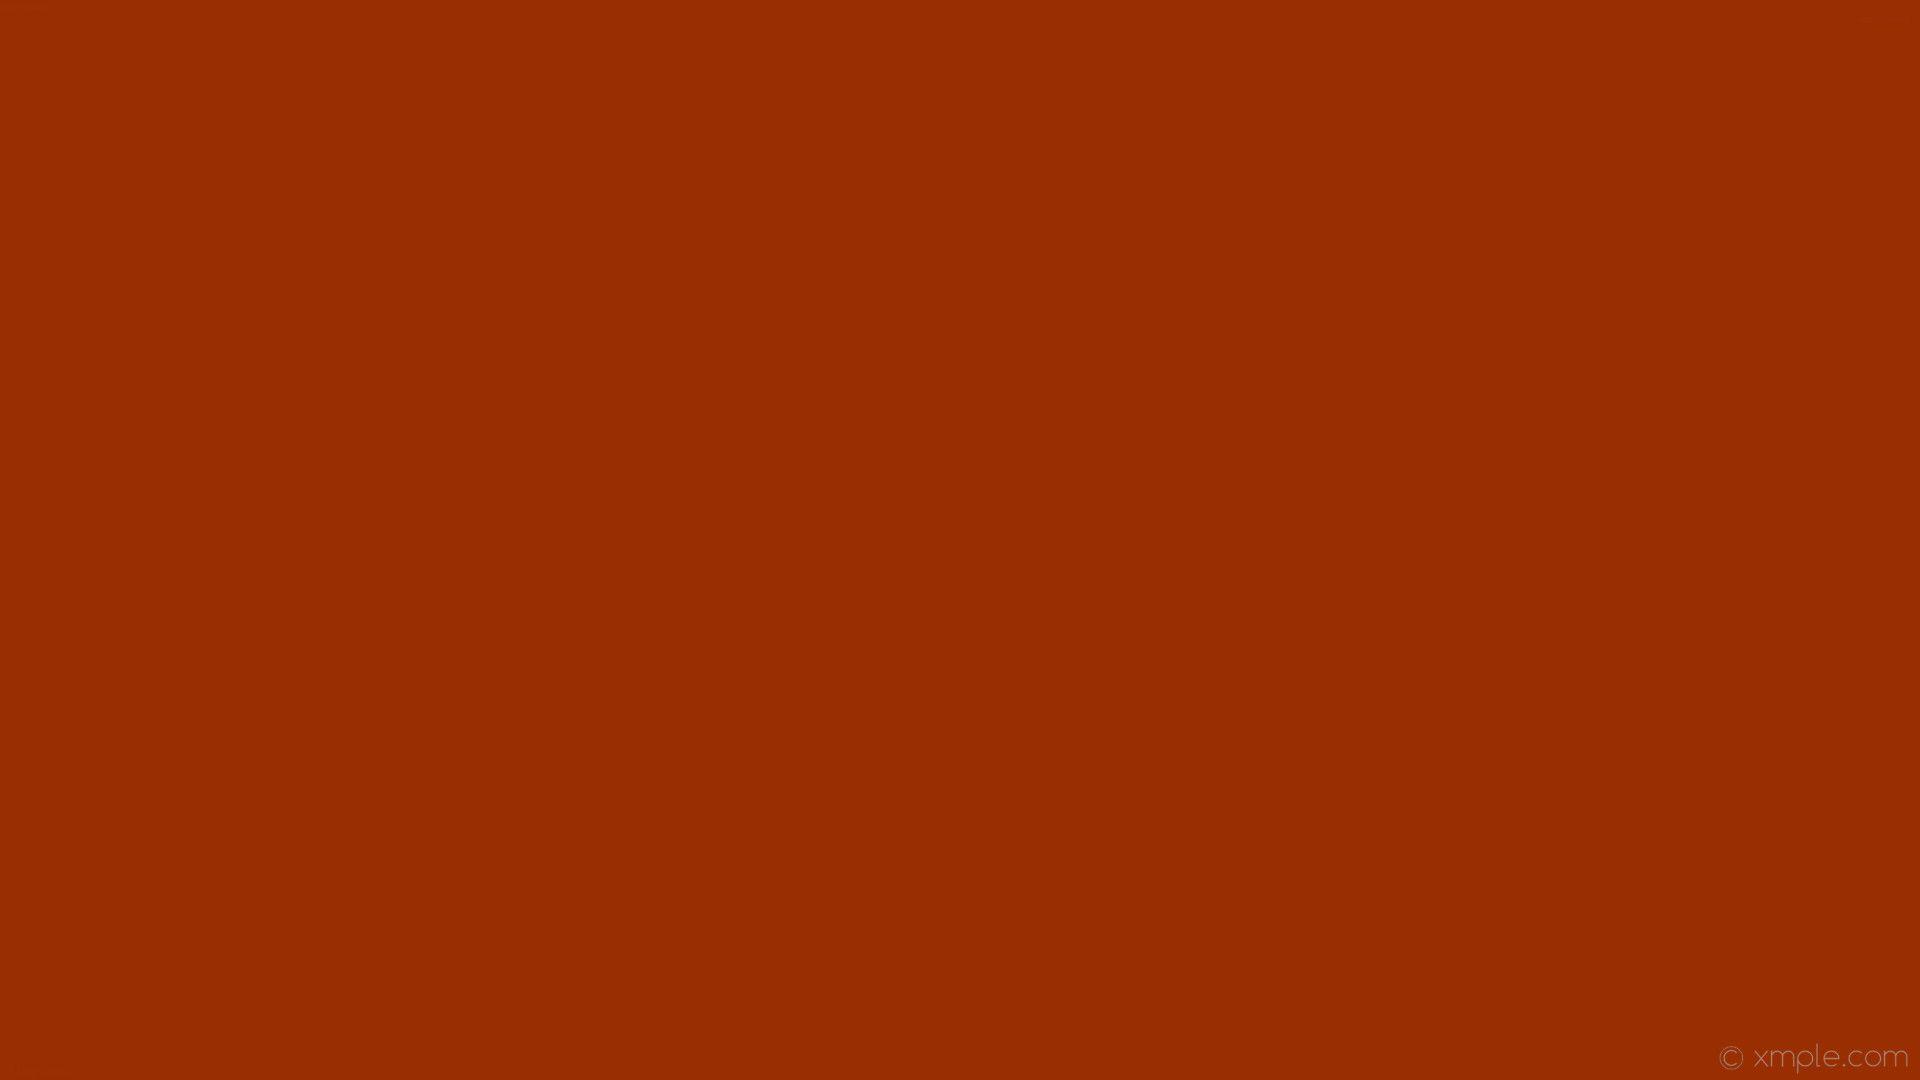 Orange Background Simple Solid Color Wallpaper Image For Free Download   Pngtree